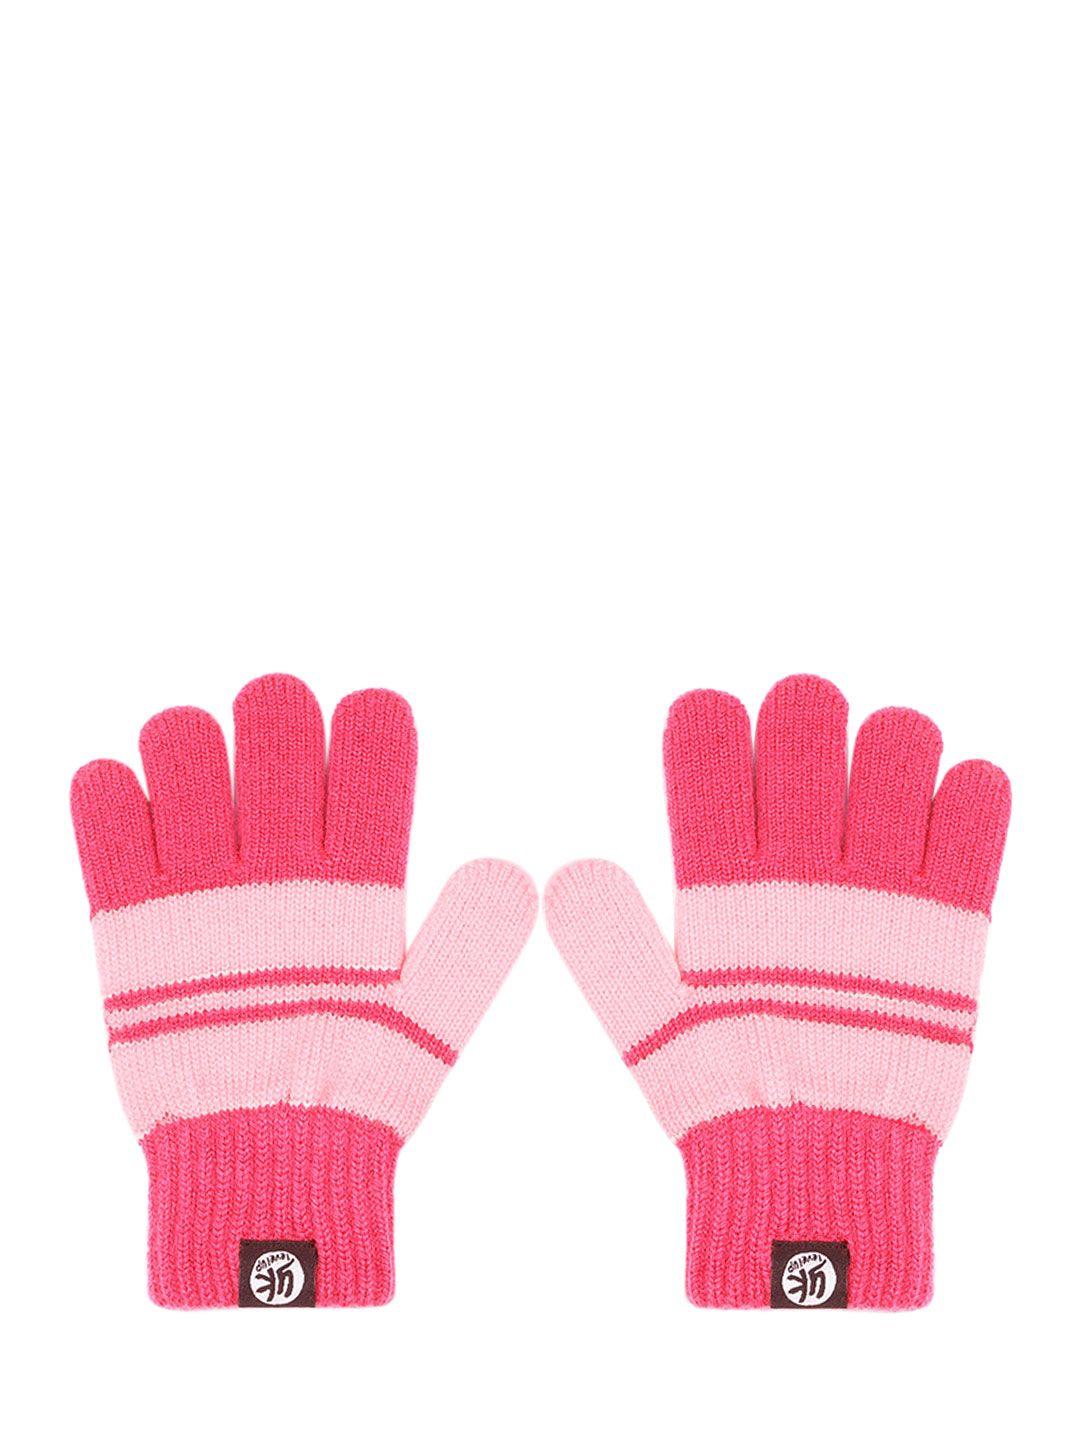 yk kids pink striped acrylic gloves